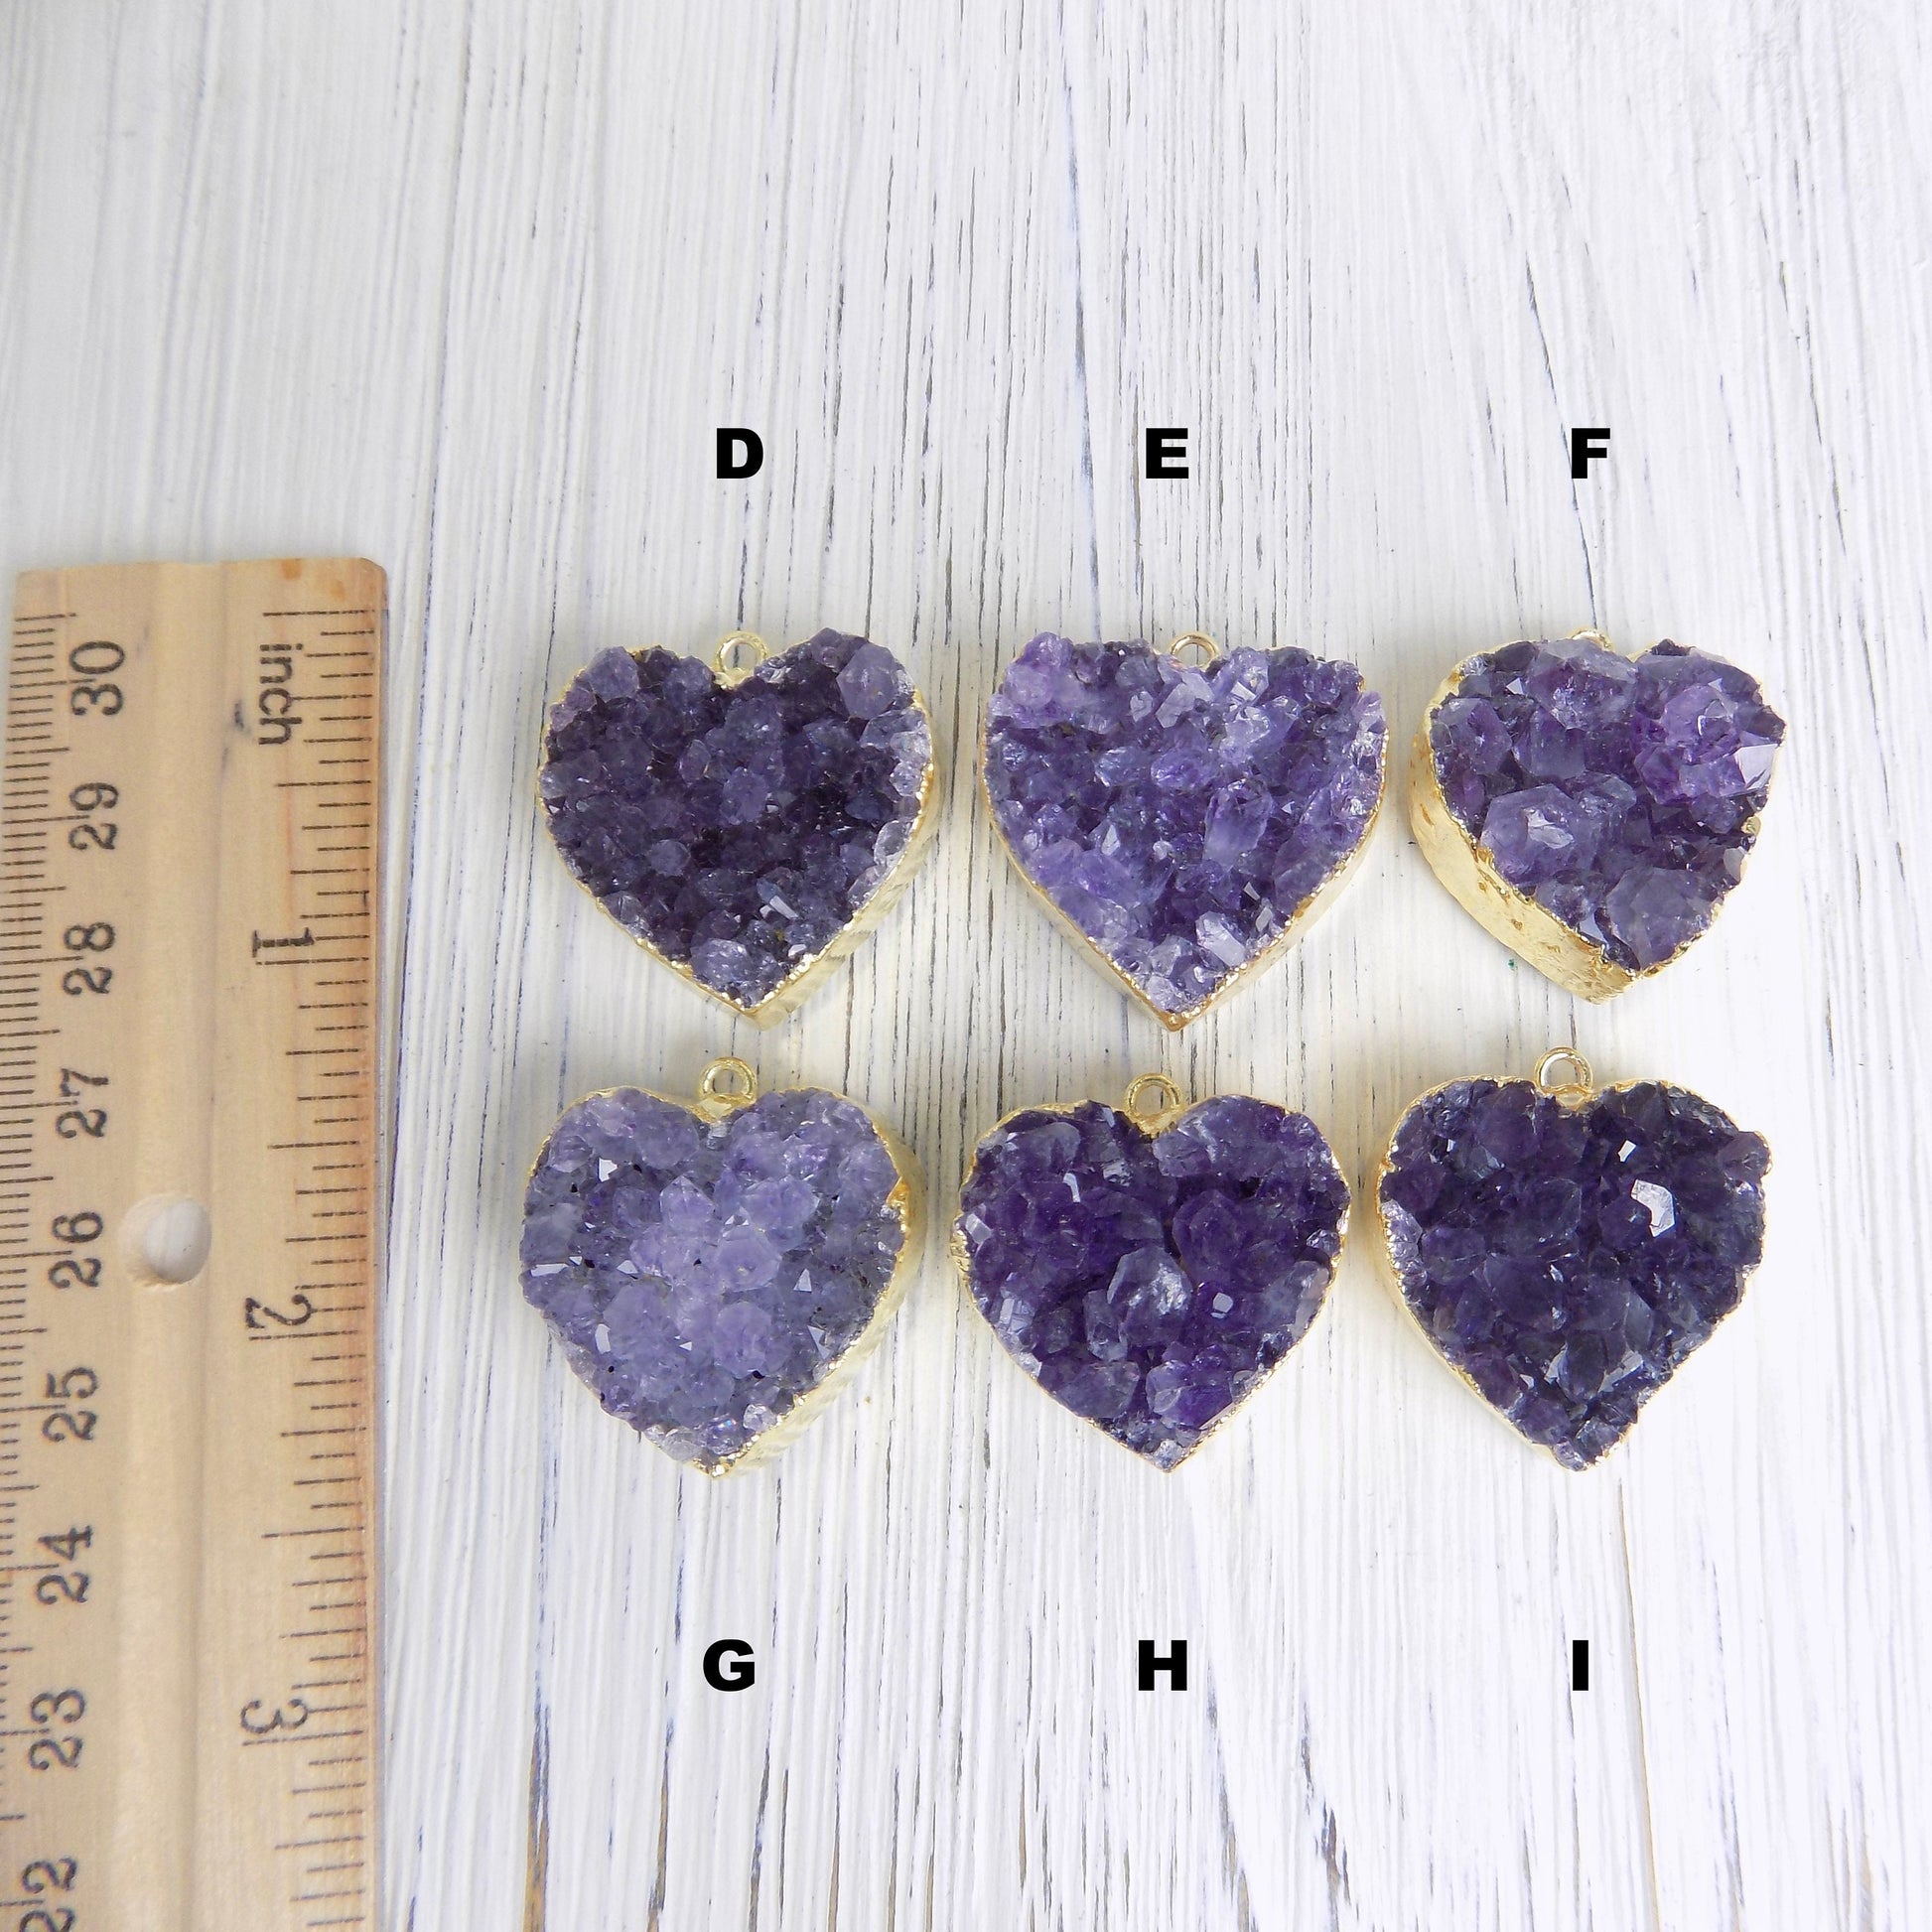 Heart Necklace, Amethyst Gemstone Necklace, Druzy Pendant, Gift Women, R11-06